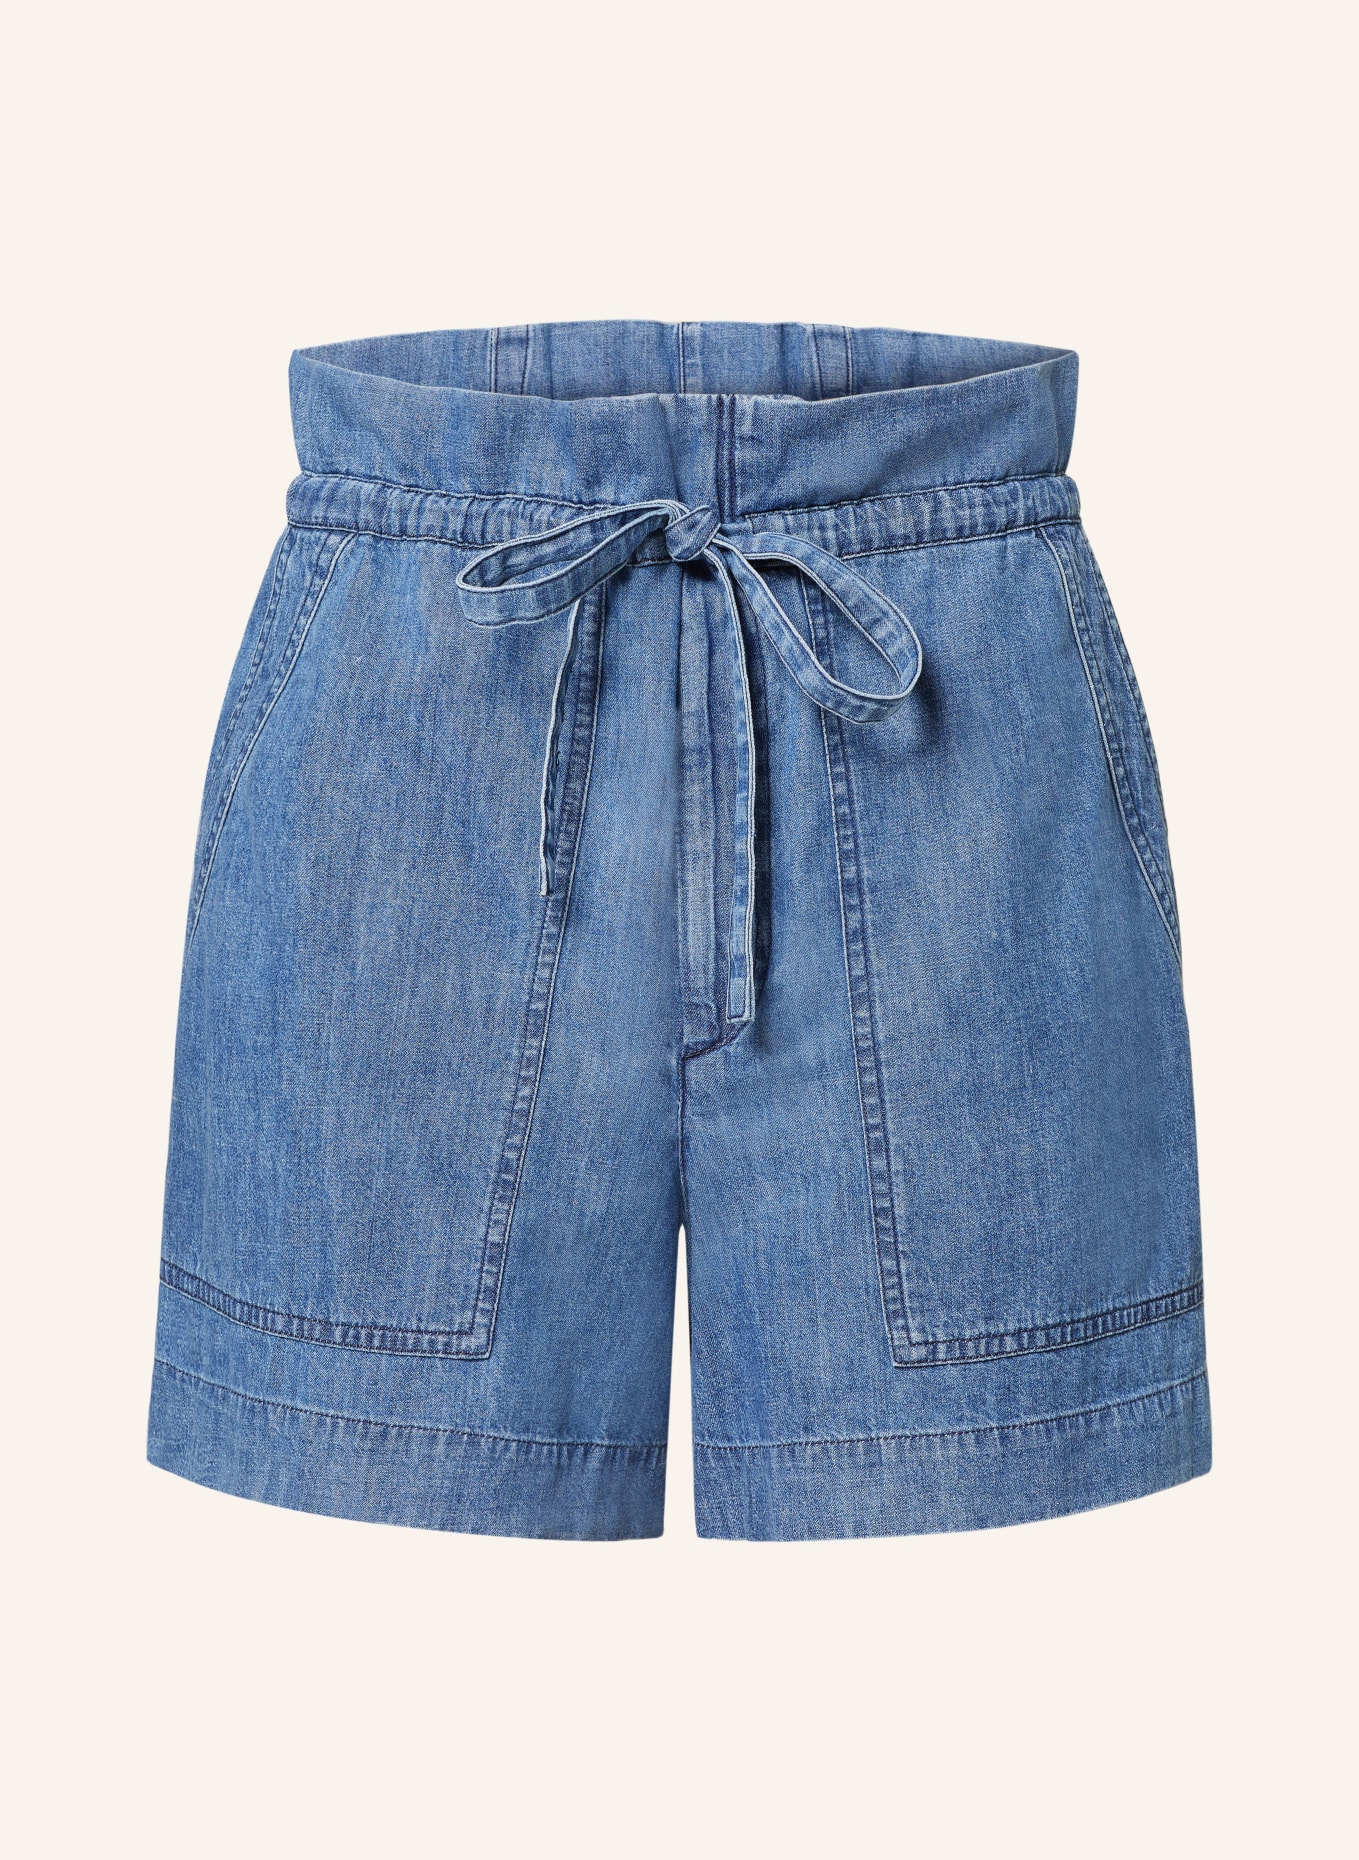 MARANT ÉTOILE Paperbag-Shorts IPOLYTE in Jeansoptik, Farbe: 30BU blue (Bild 1)